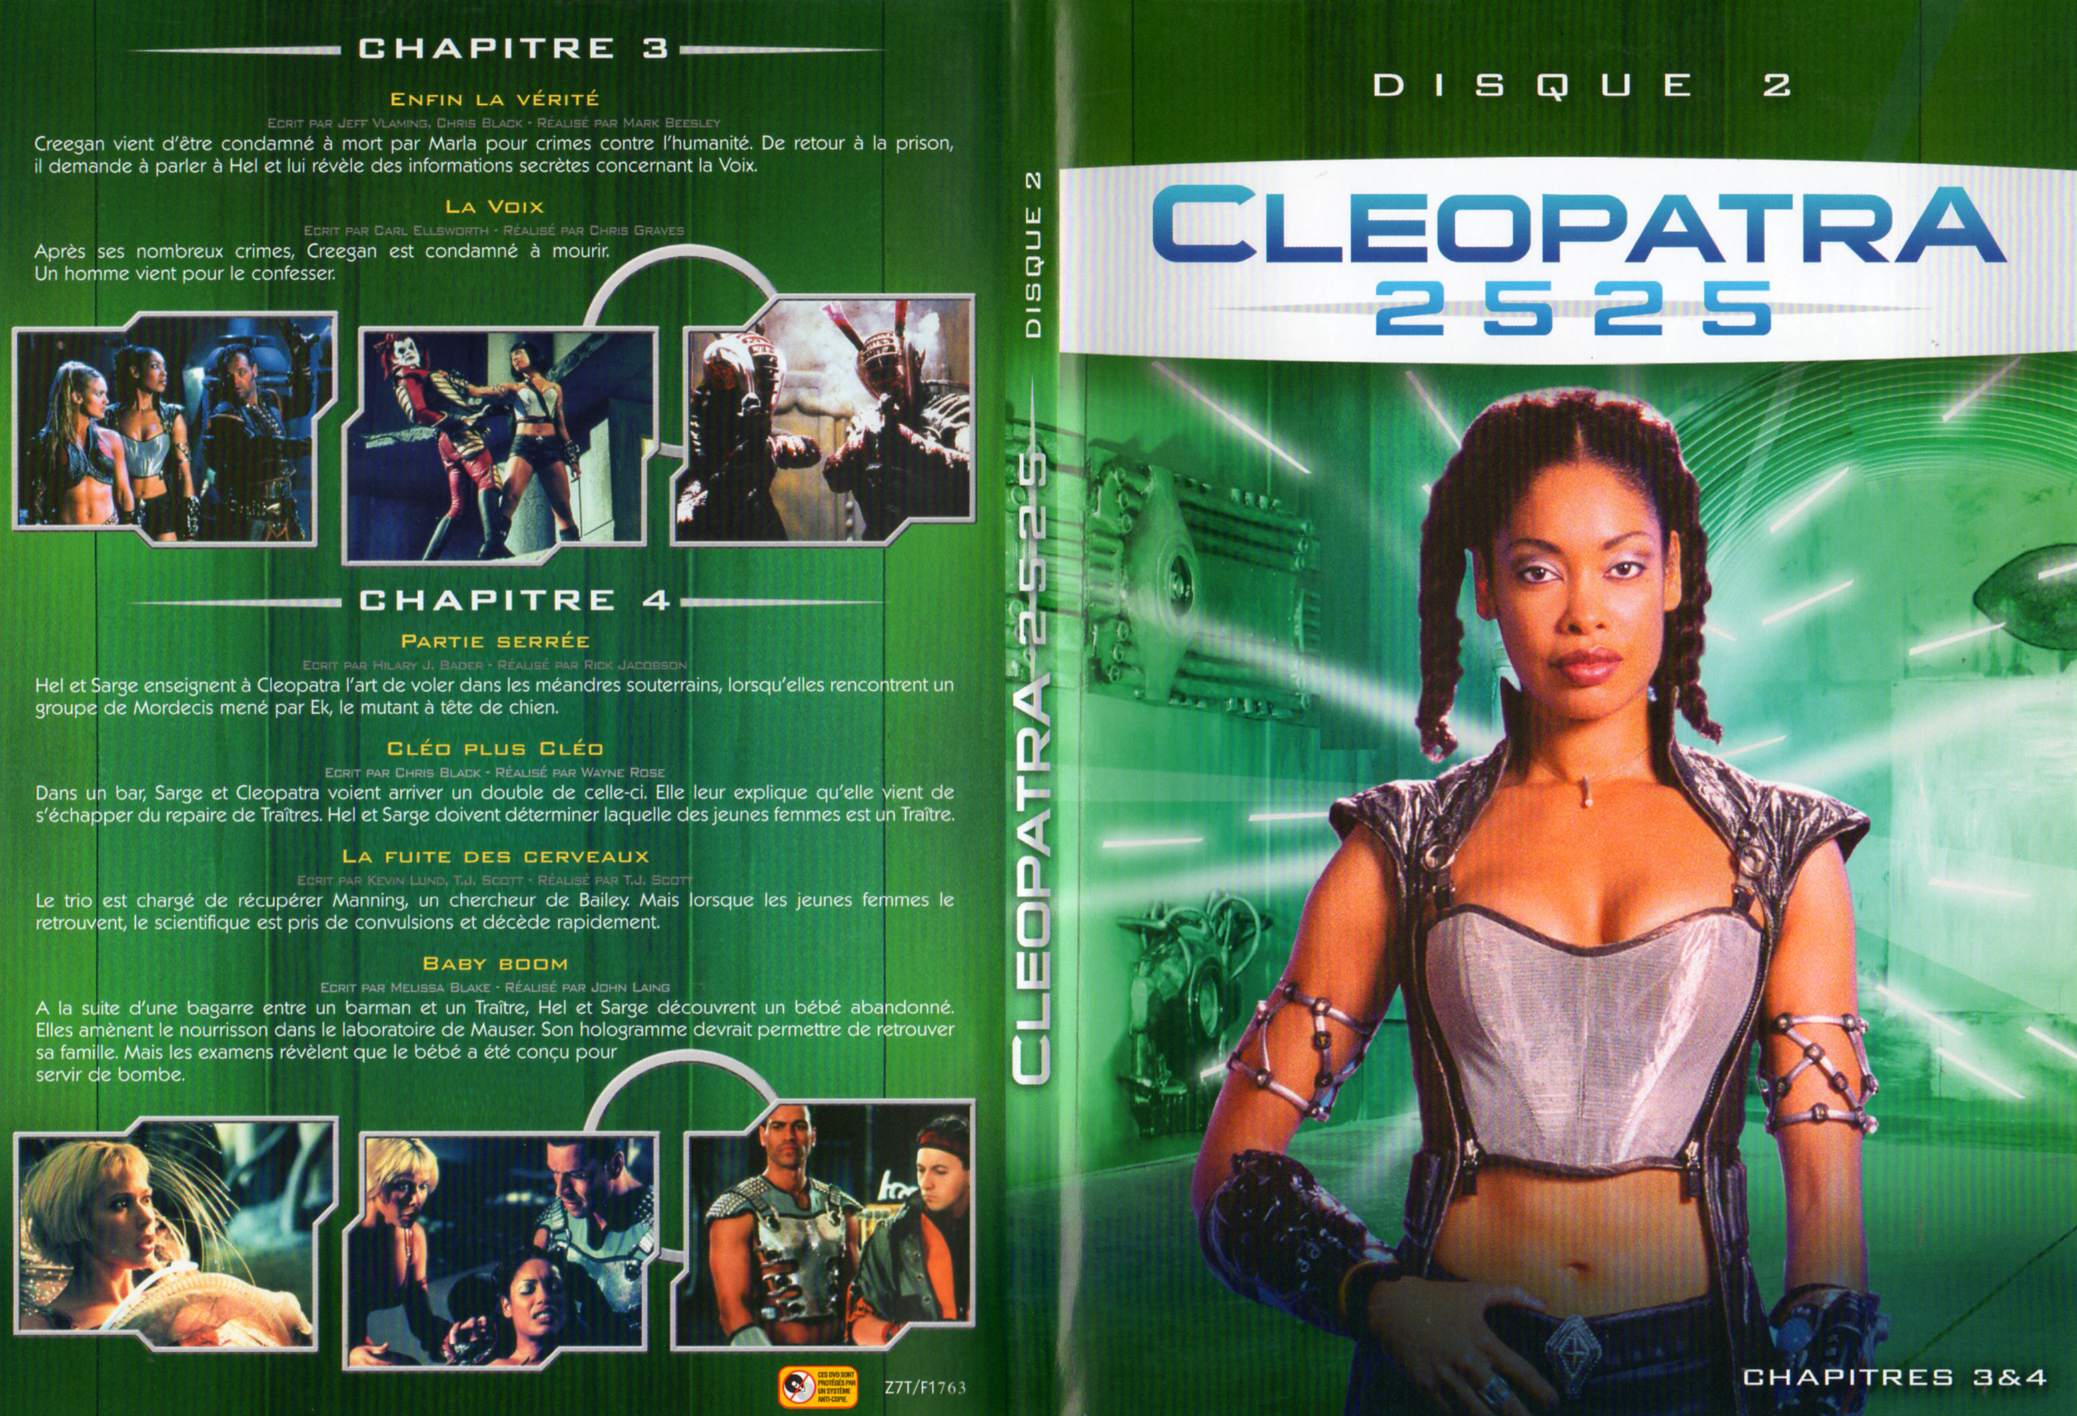 Jaquette DVD Cleopatra 2525 DVD 2